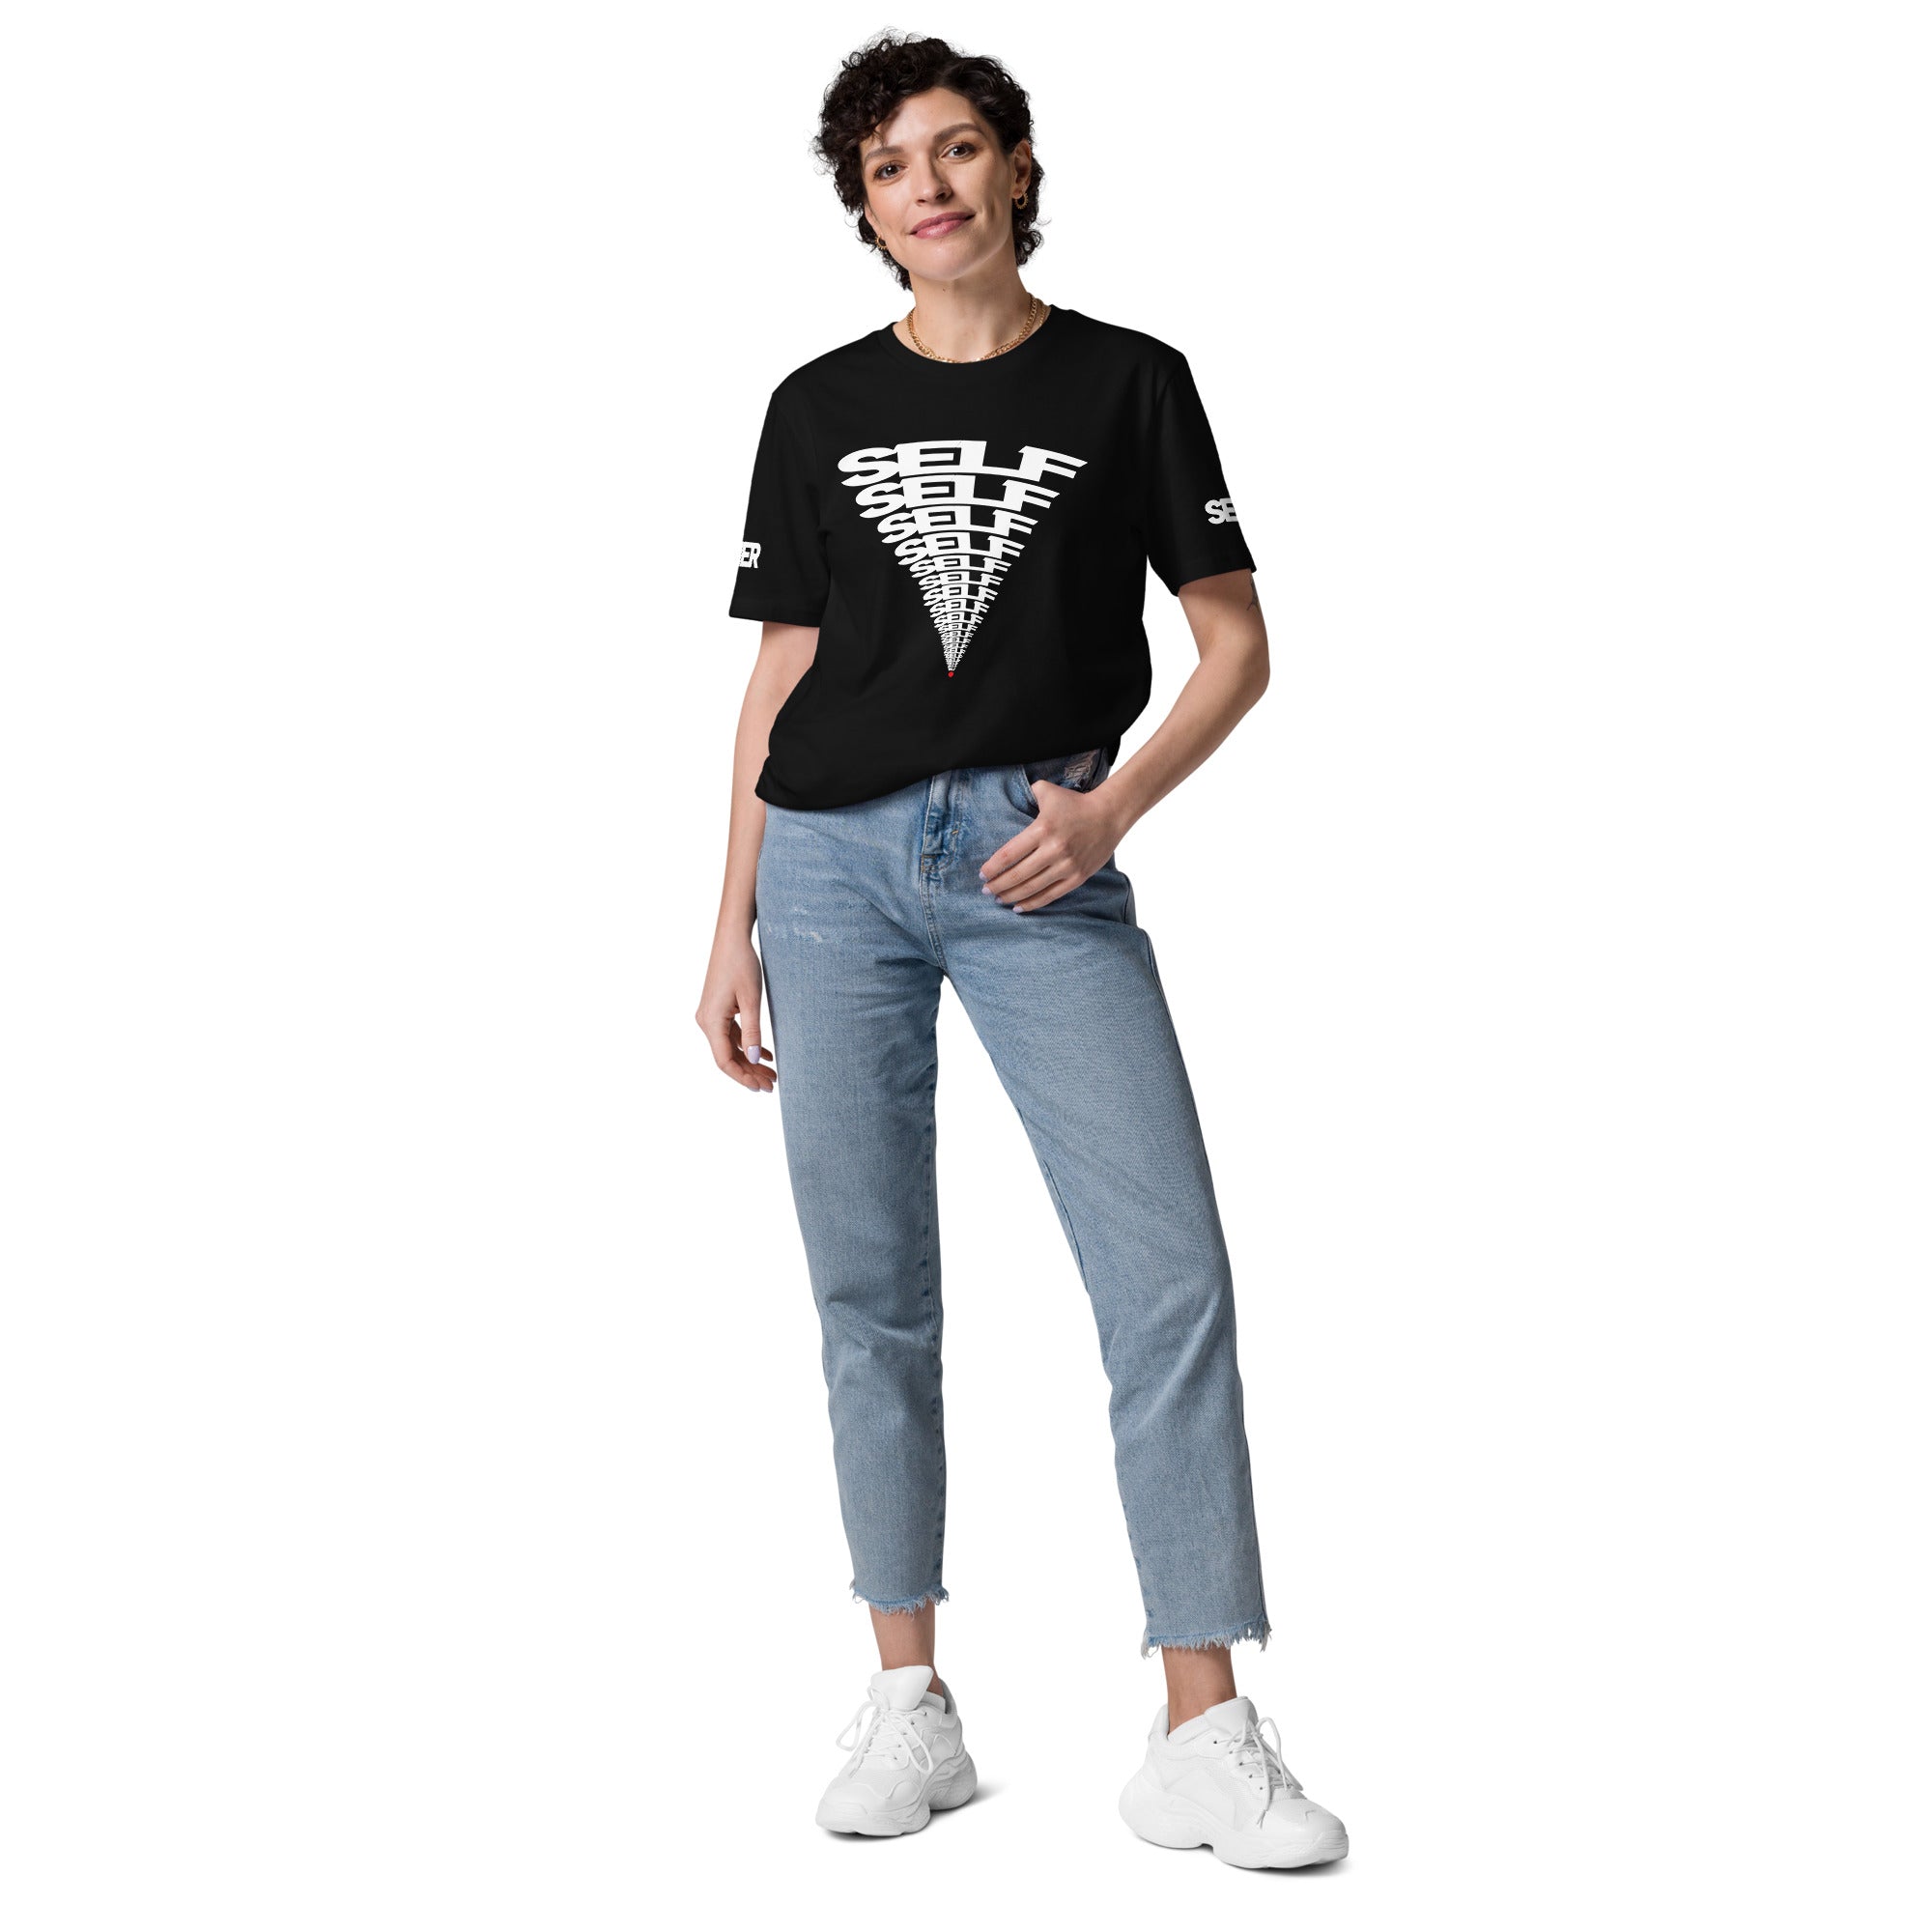 "Higher Self" Unisex organic cotton t-shirt